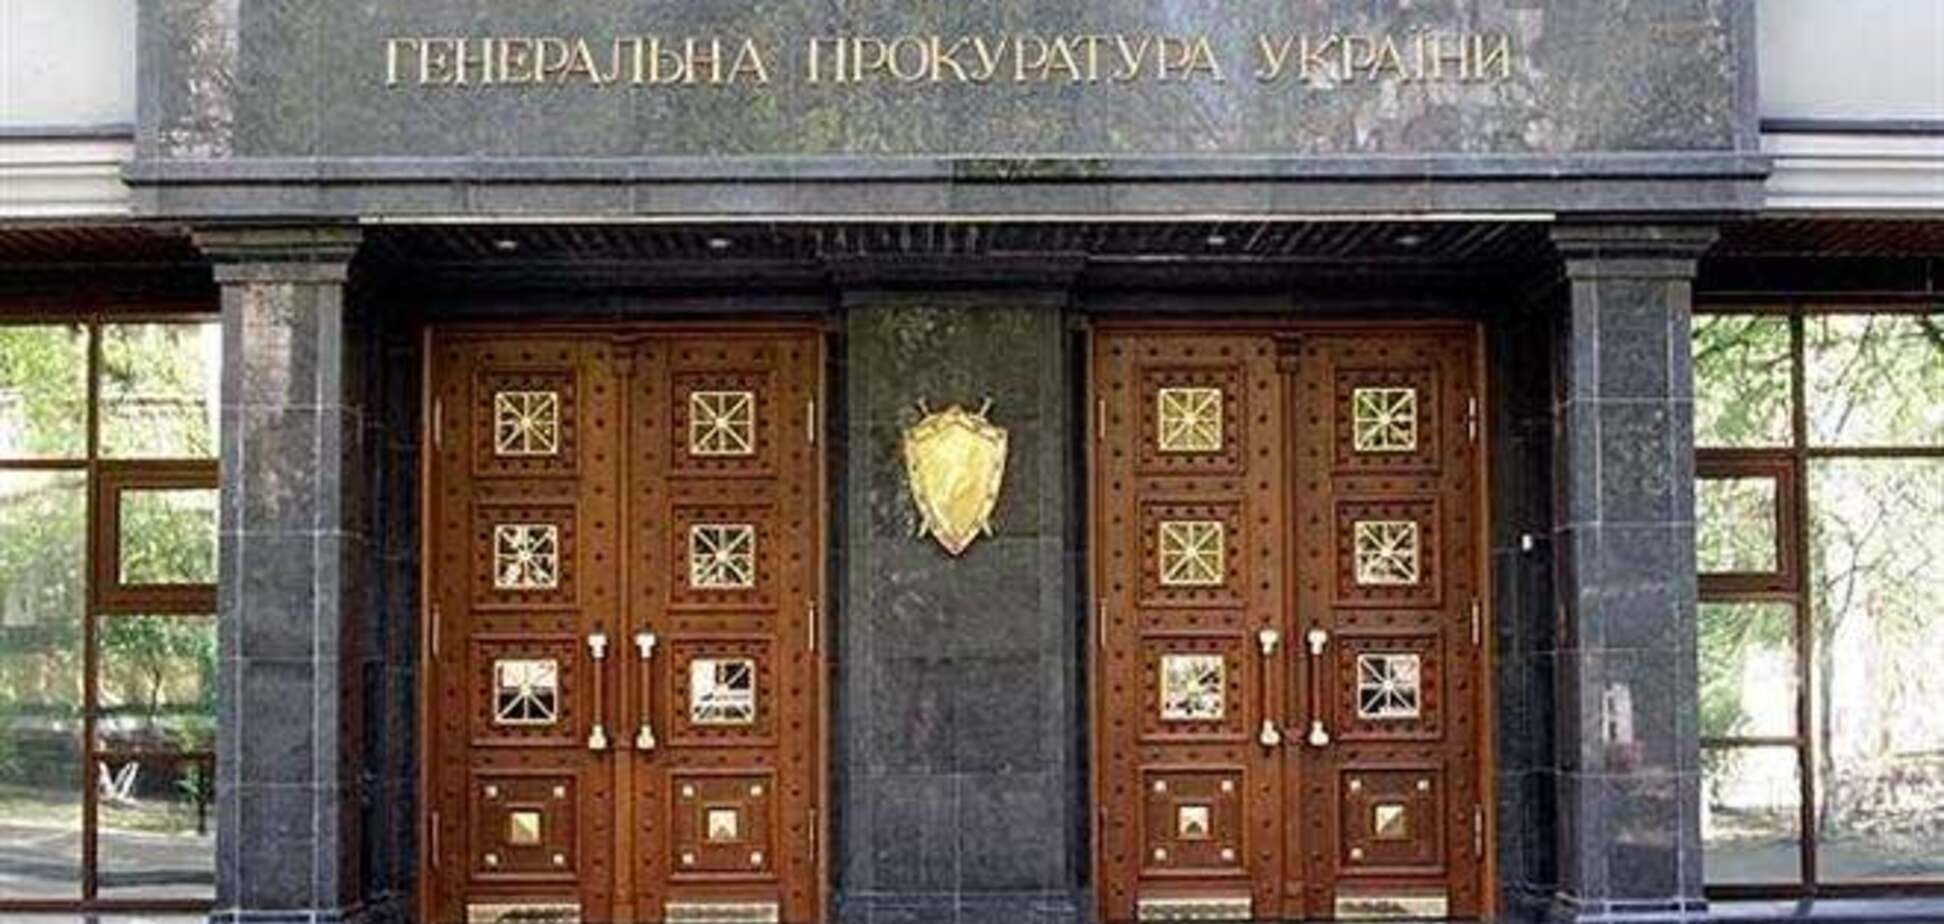 ГПУ подала иски об отмене назначения Аксенова и проведения референдума в Крыму